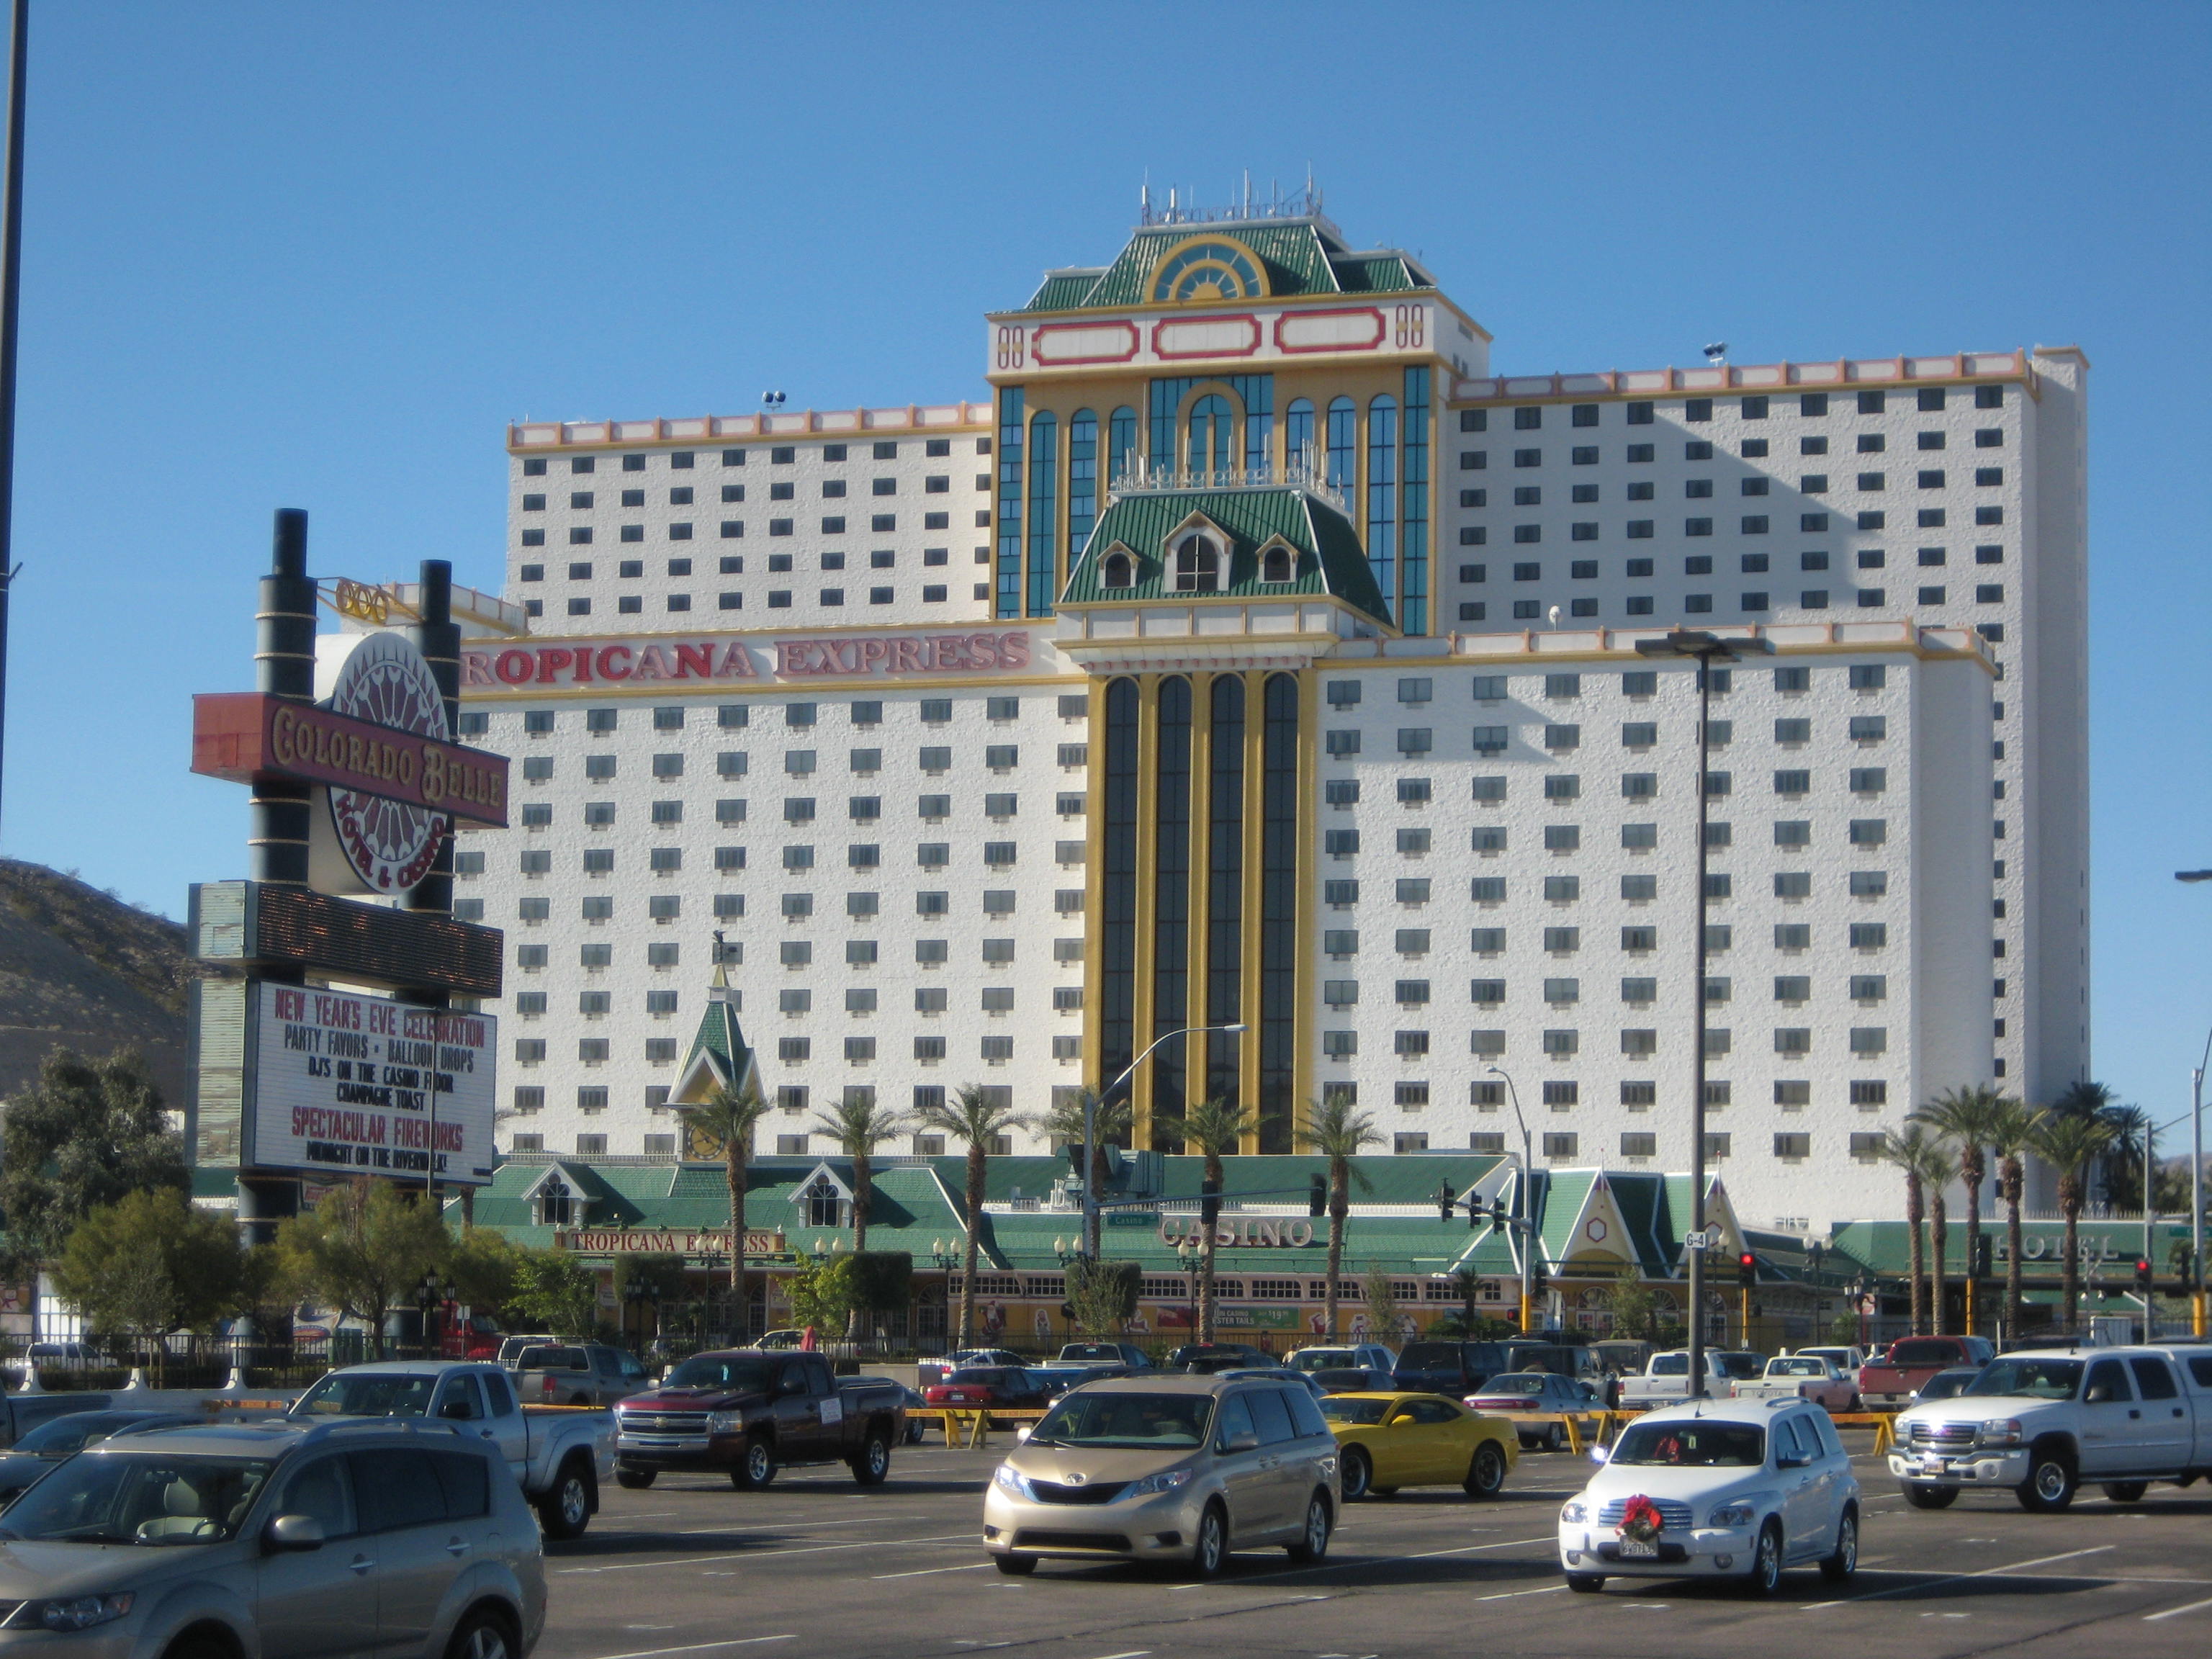 Tropicana Hotel and Casino Las Vegas NV